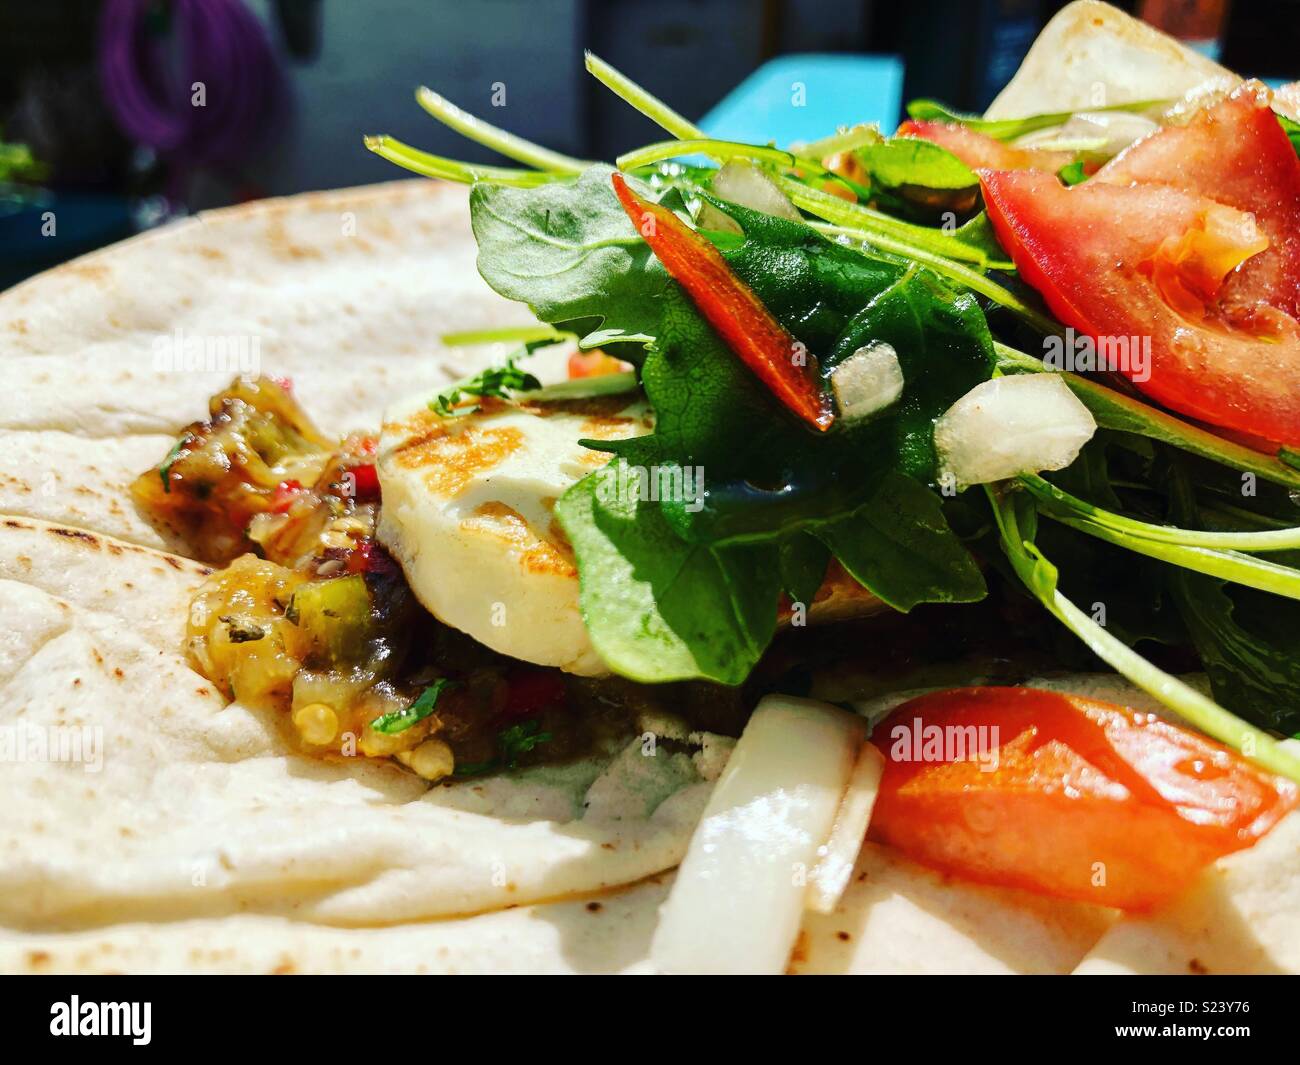 Halloumi, baba ganouj, salad on flat bread Stock Photo